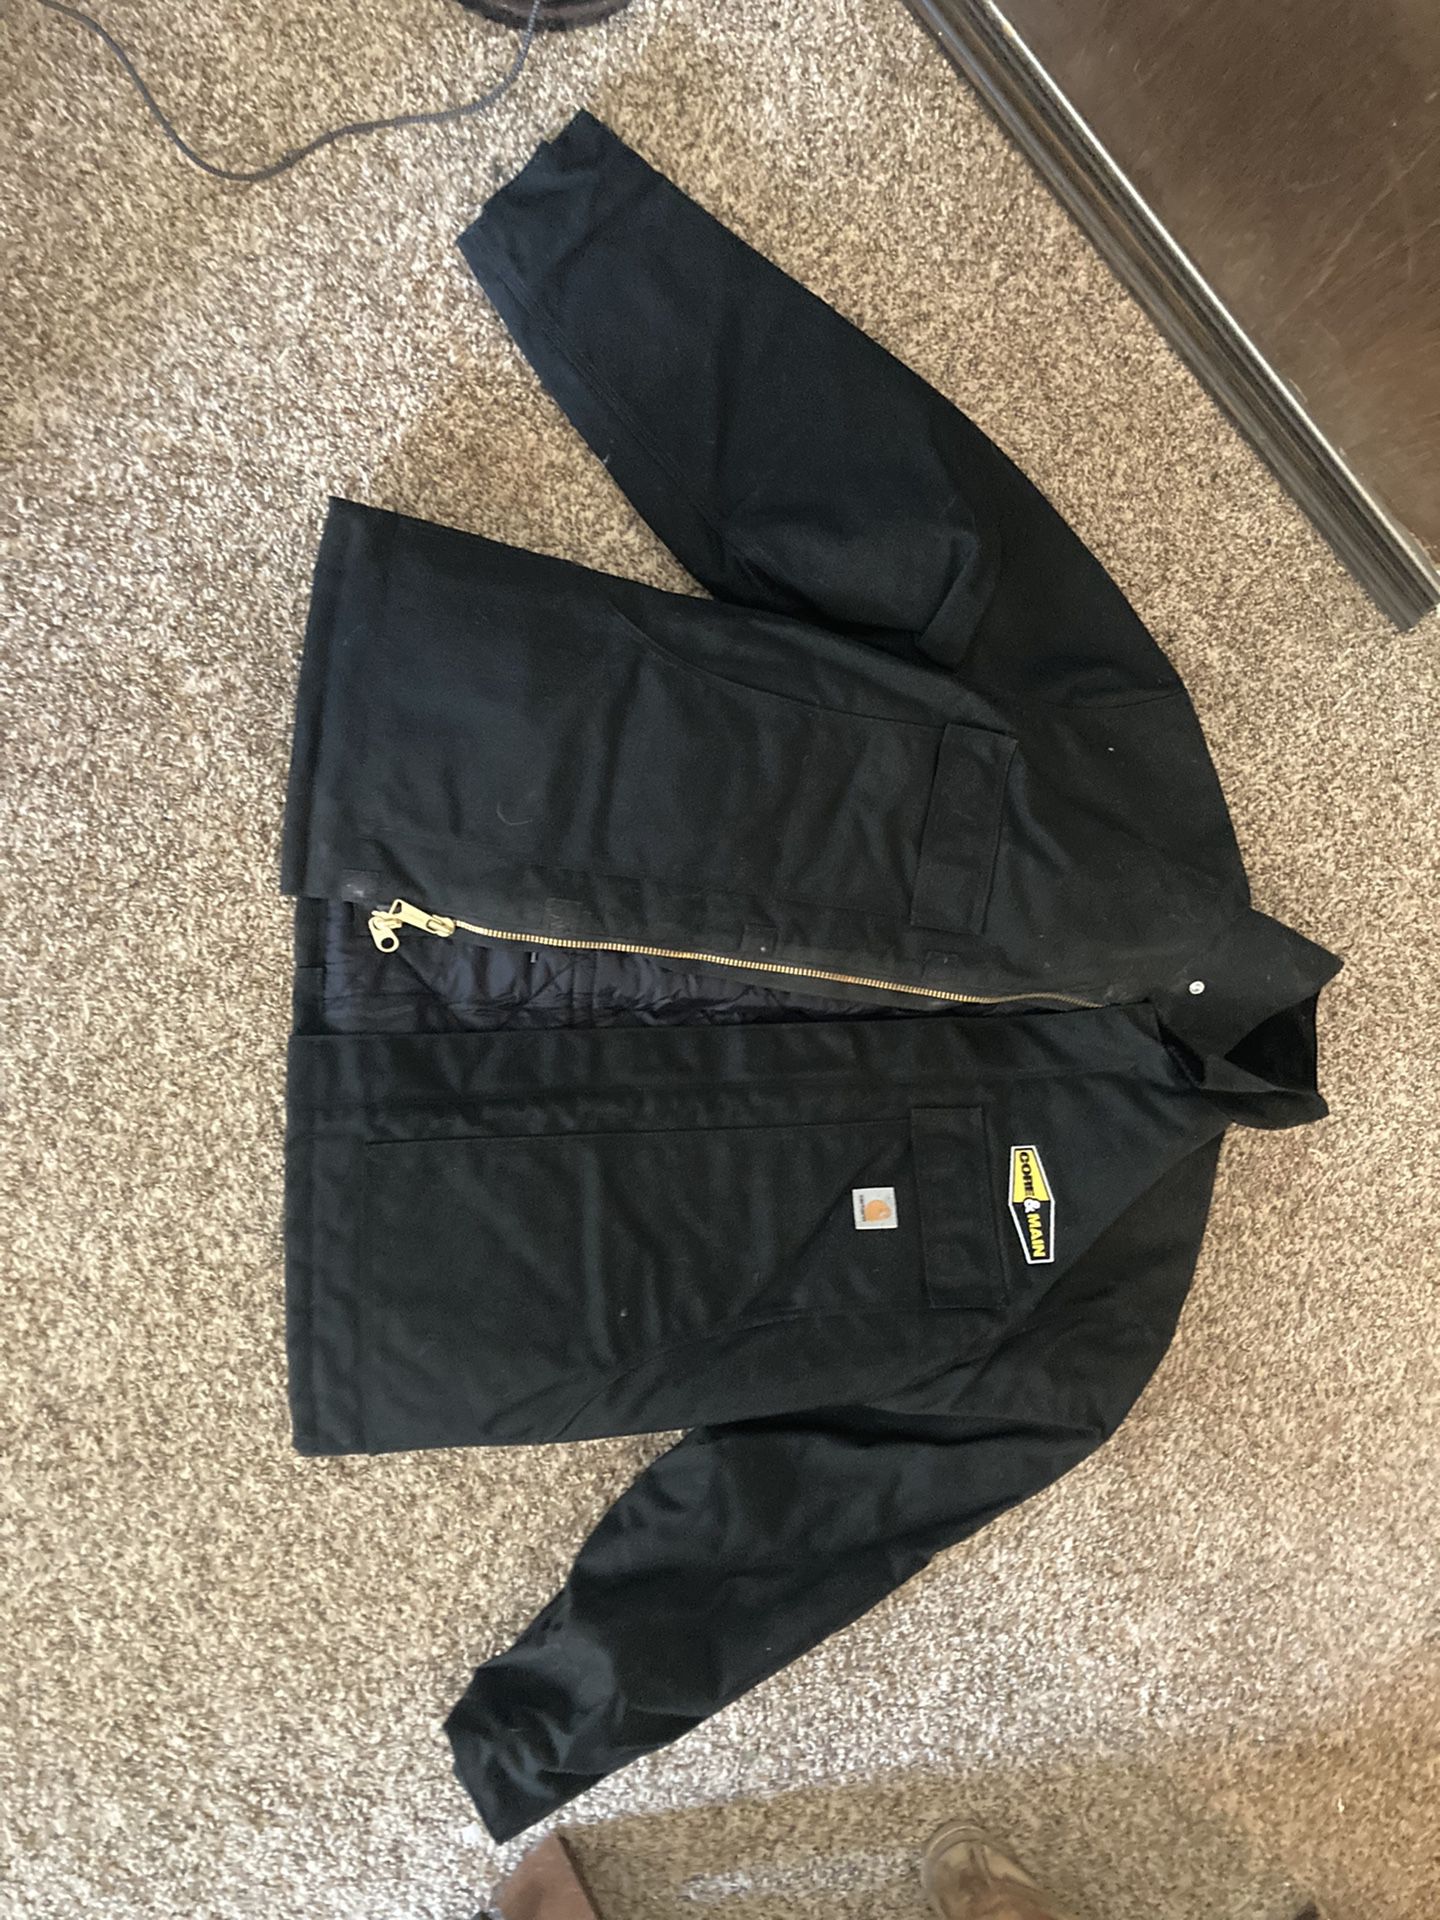 Carhart jacket large brand new